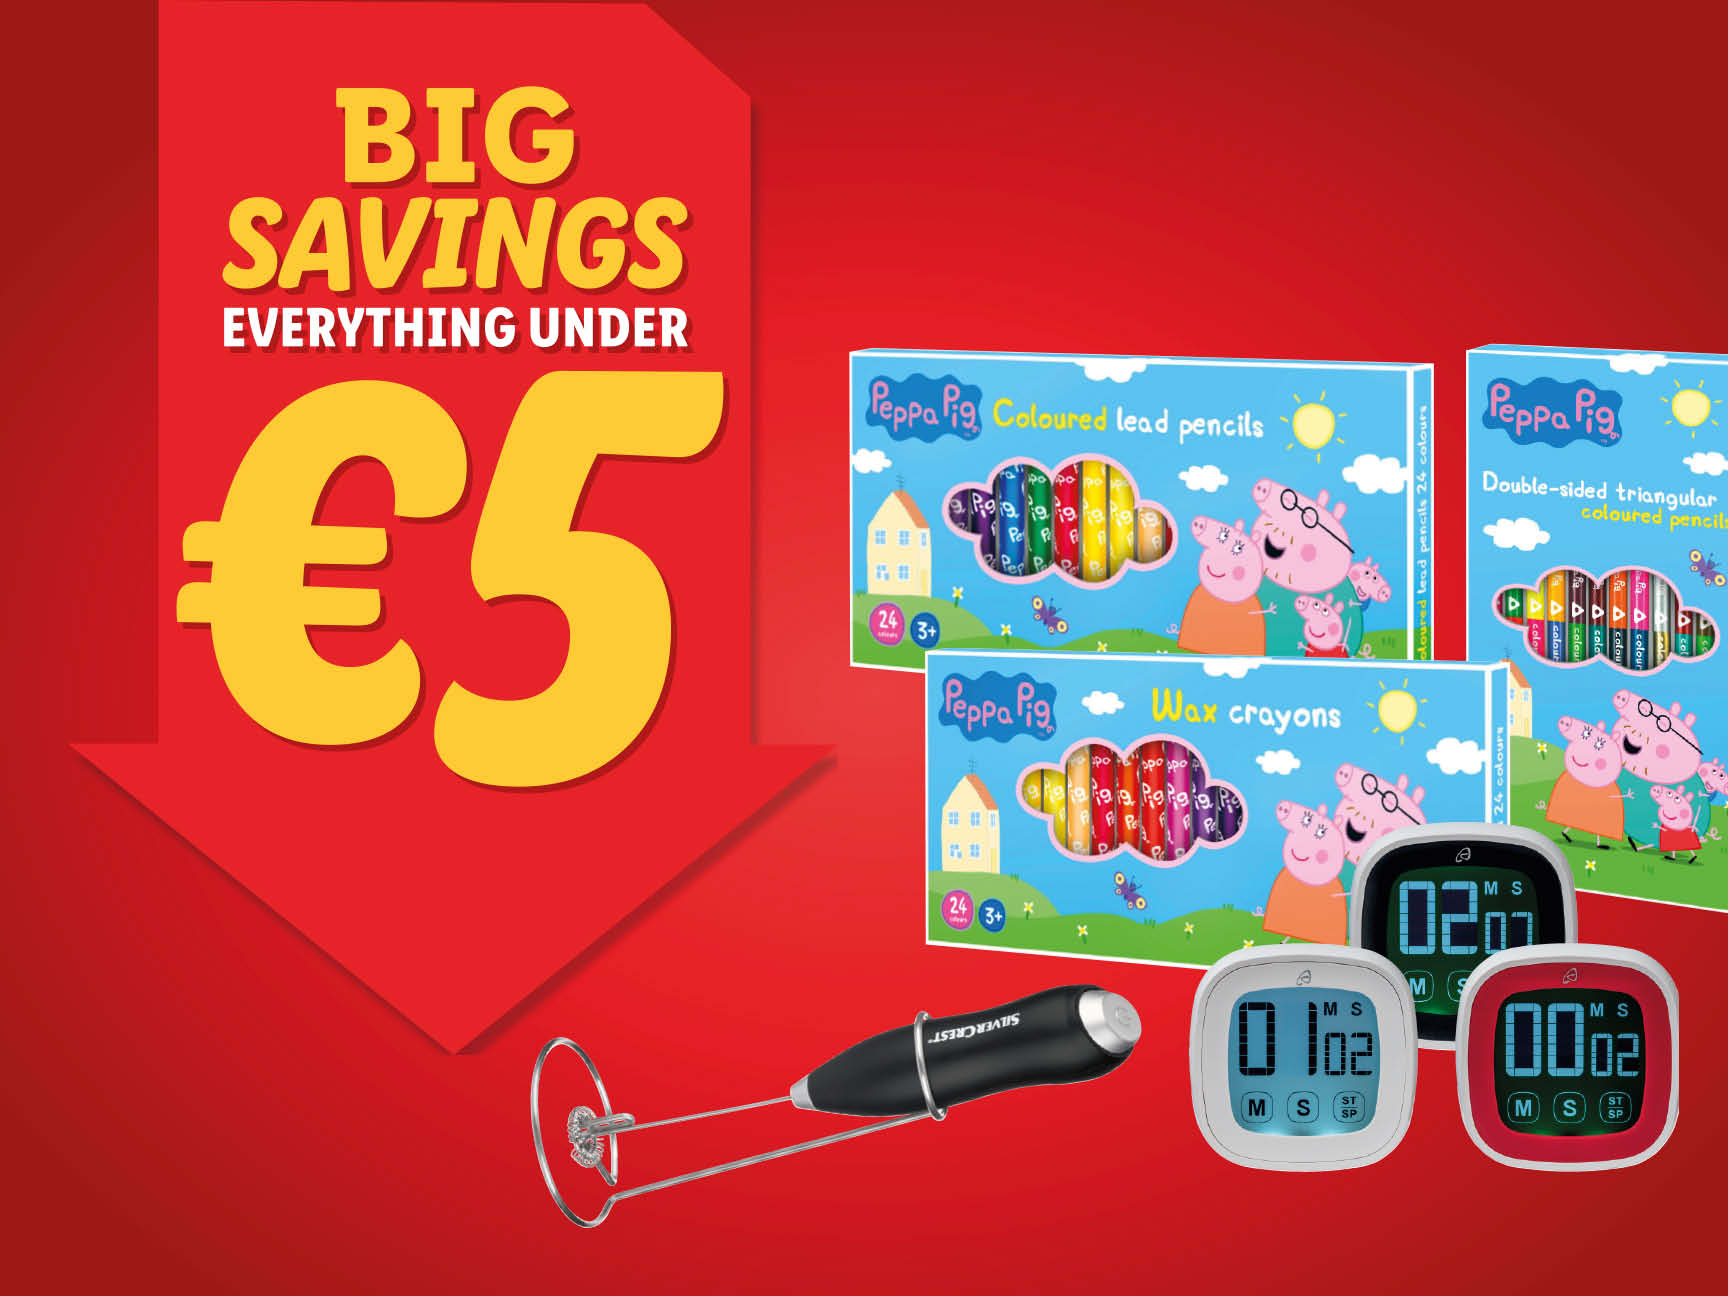 Big savings: everything under €5